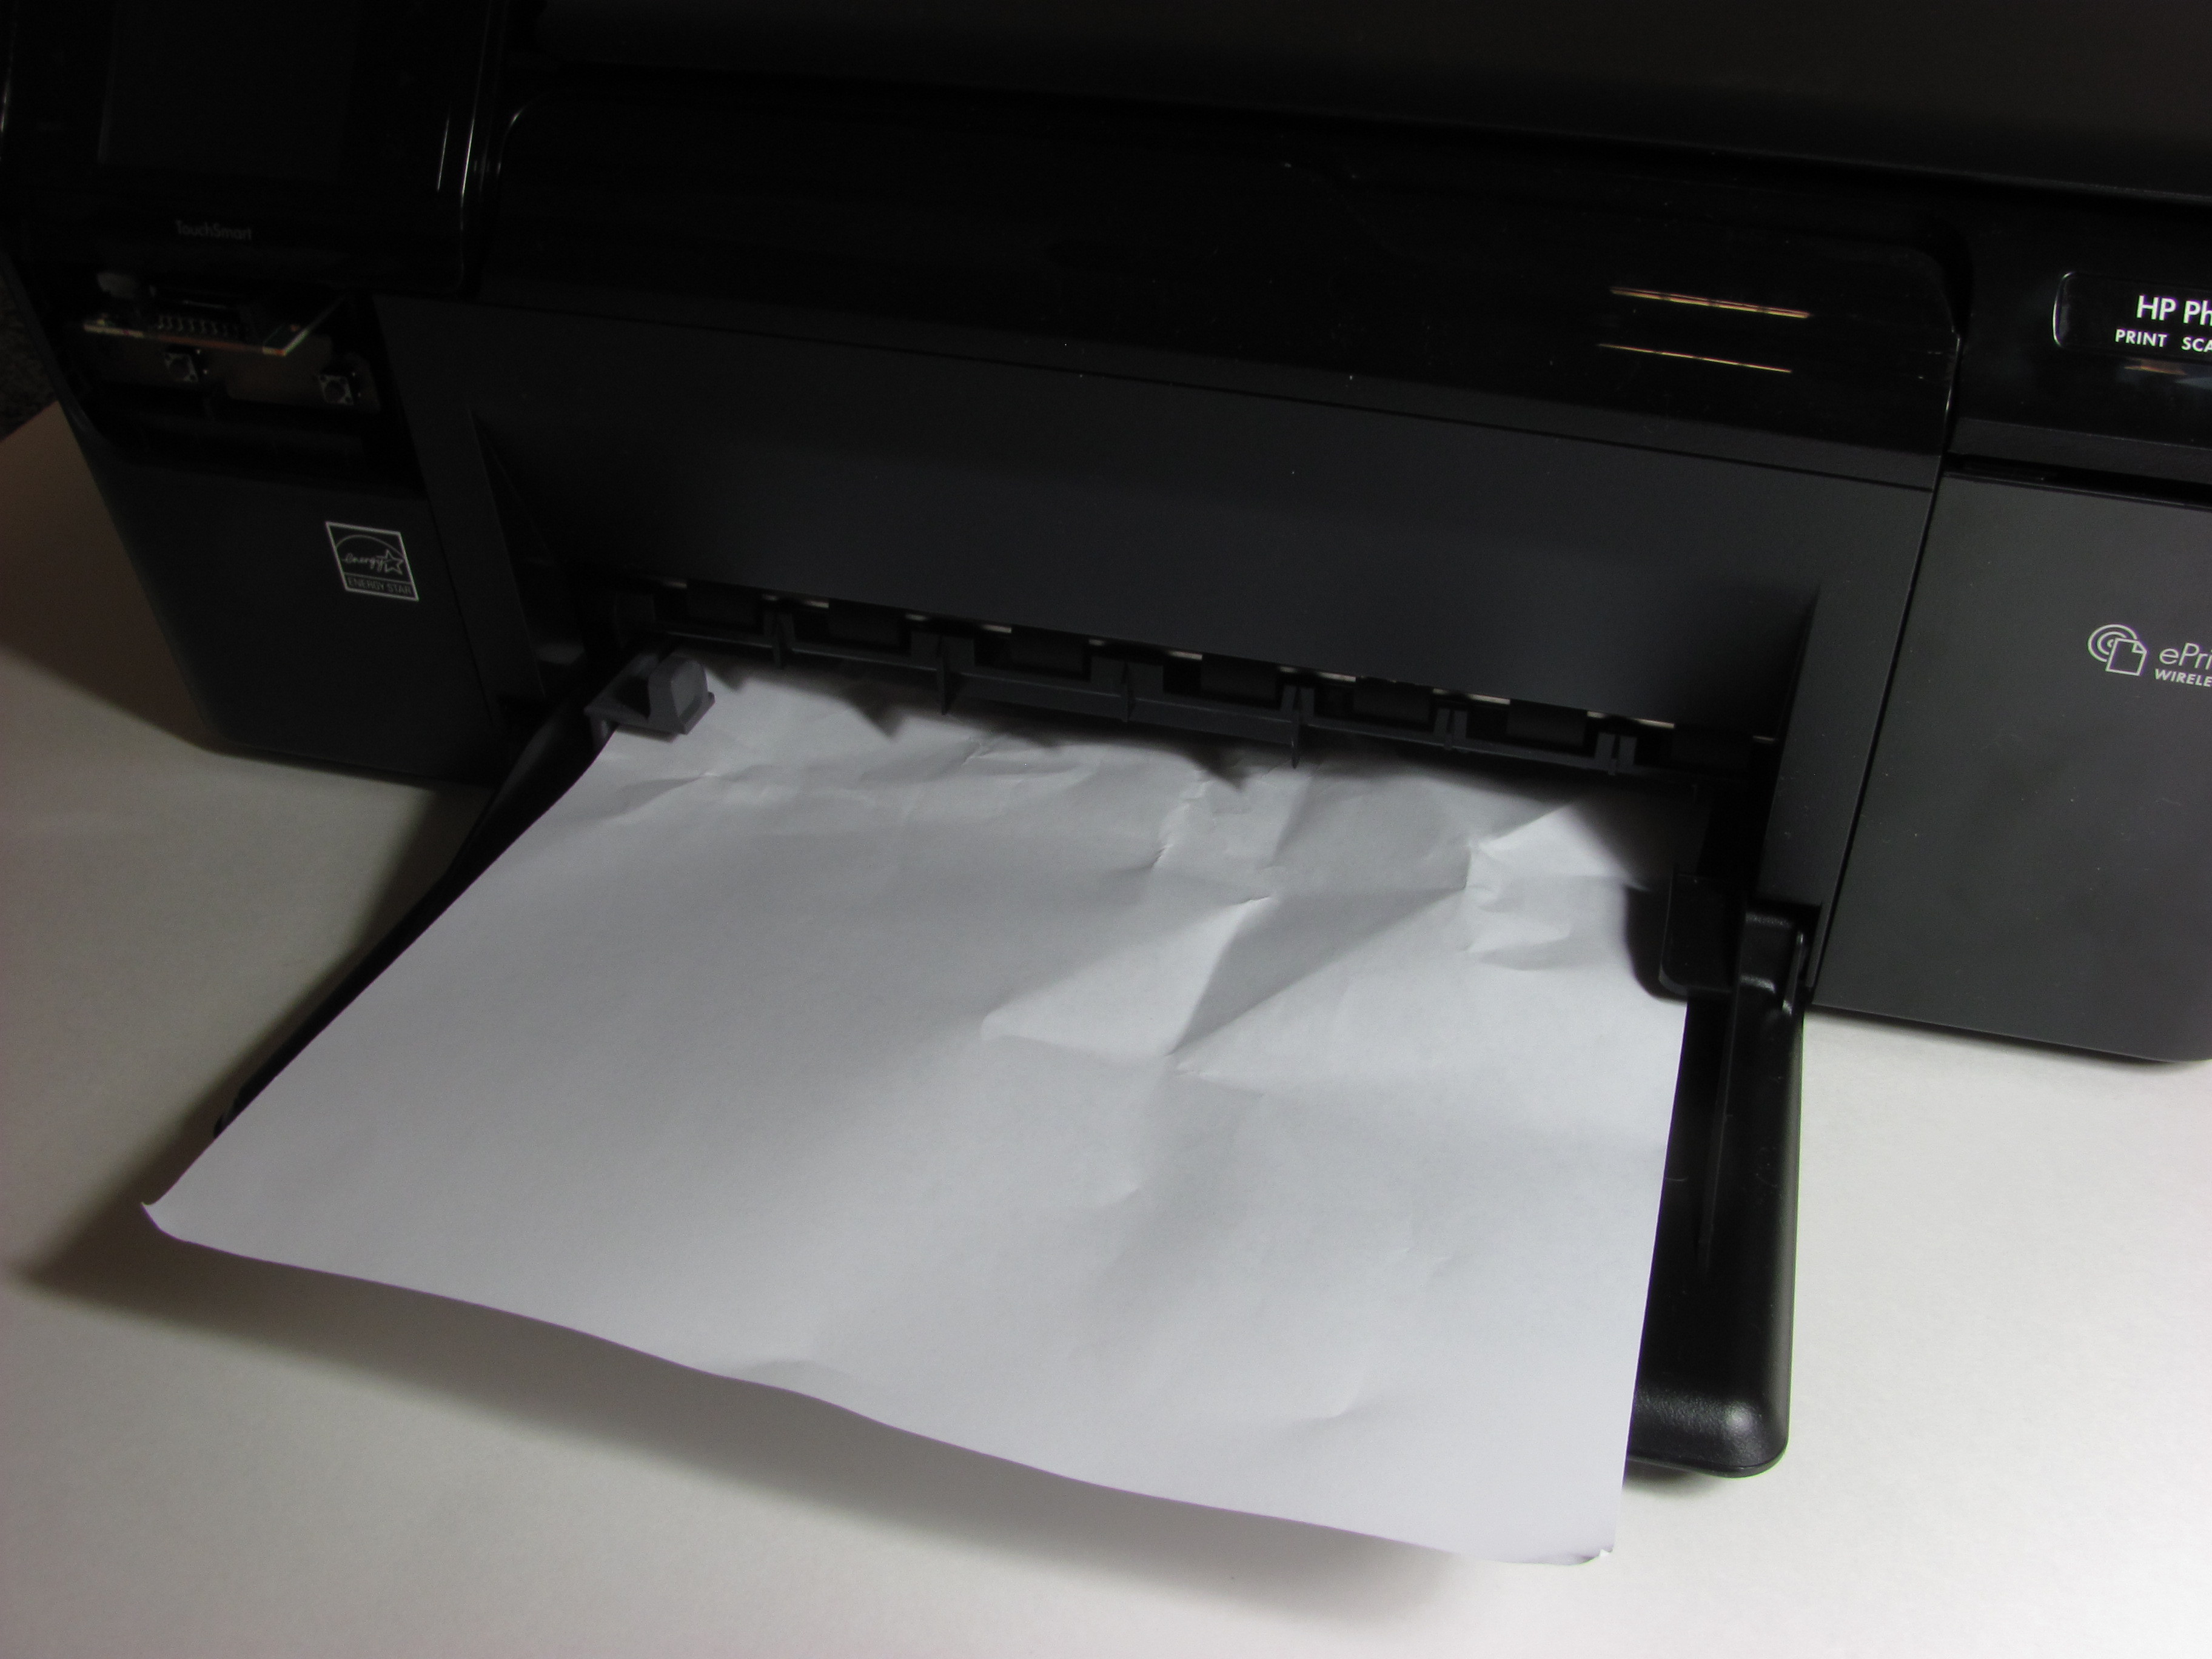 Printer Paper Jams: Causes, Solution, & Prevention - Inkjet Wholesale Blog